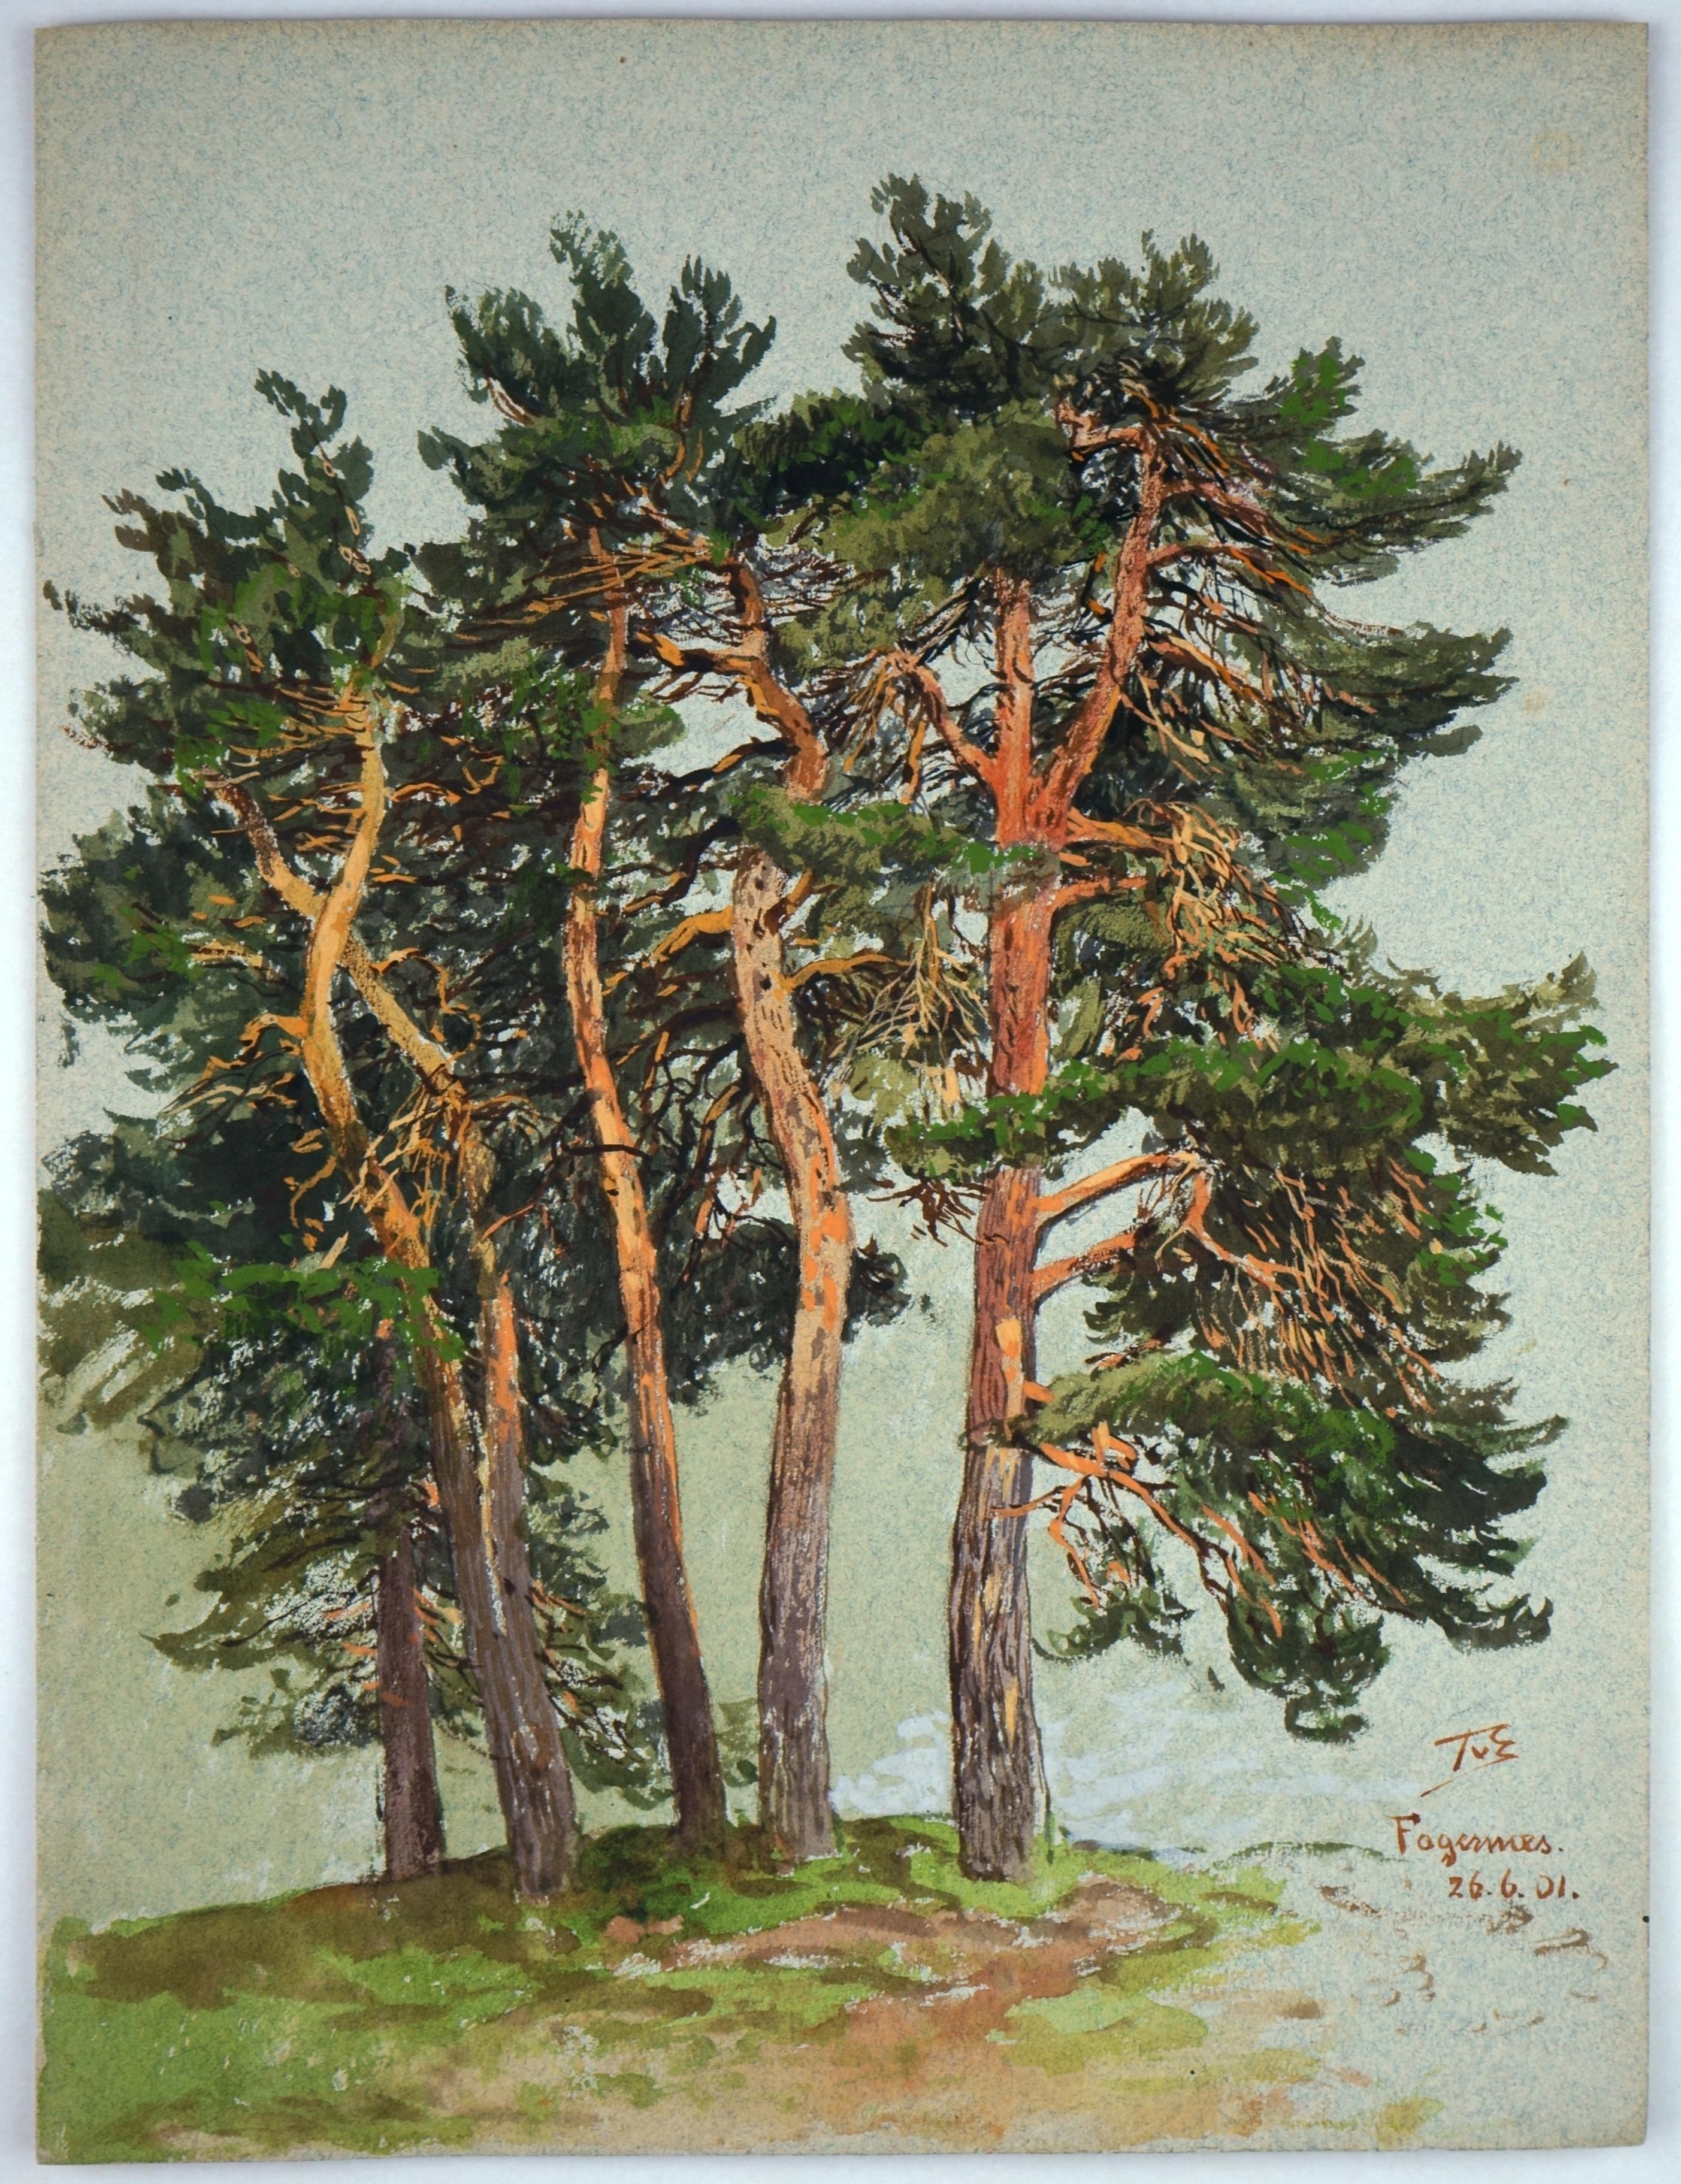 Norwegian Pine Grove - The inner glow of the trees -